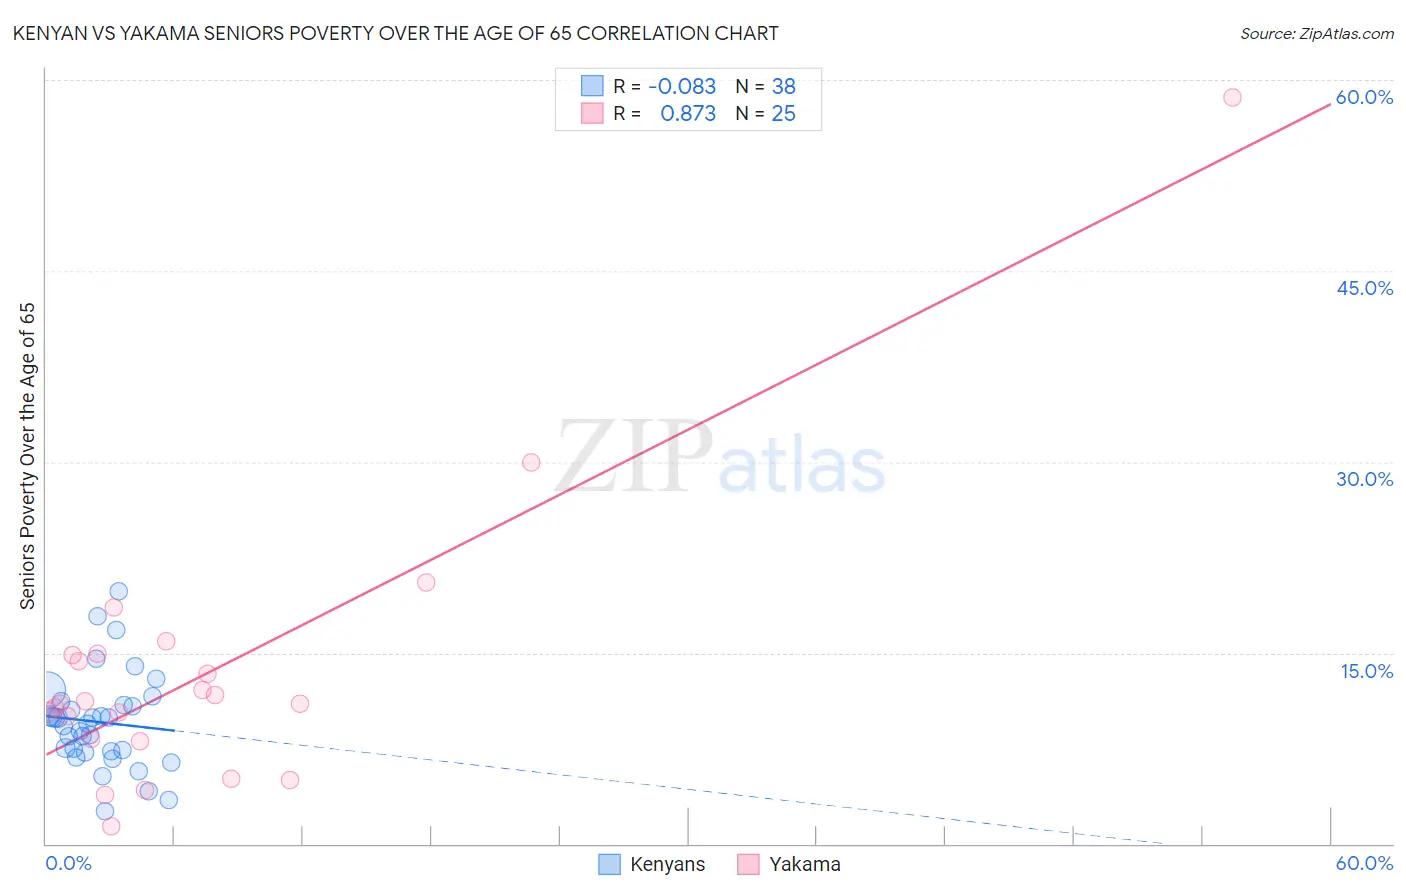 Kenyan vs Yakama Seniors Poverty Over the Age of 65